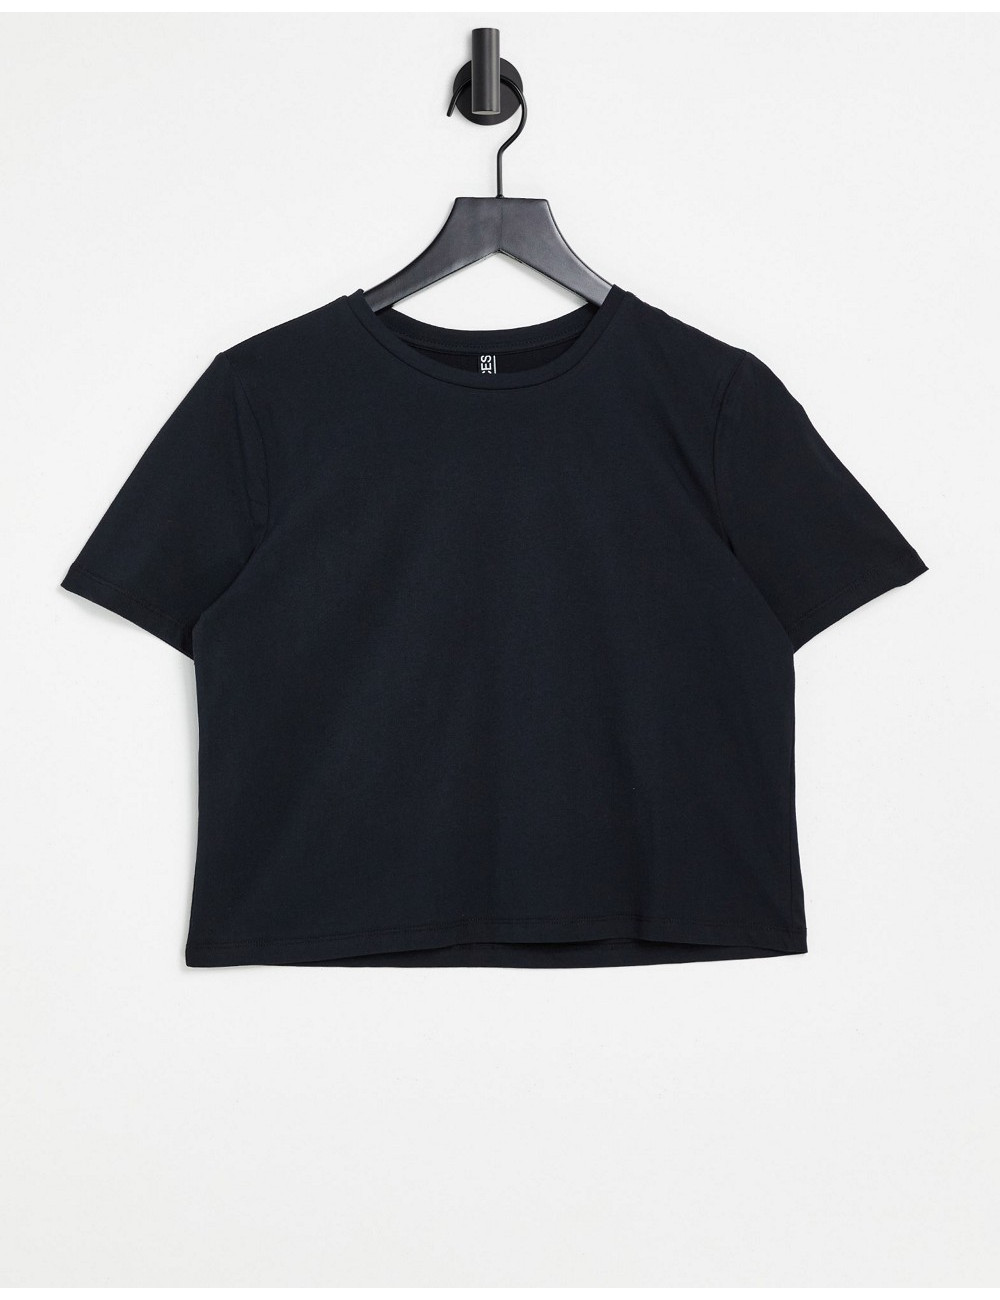 Pieces crop t-shirt in black